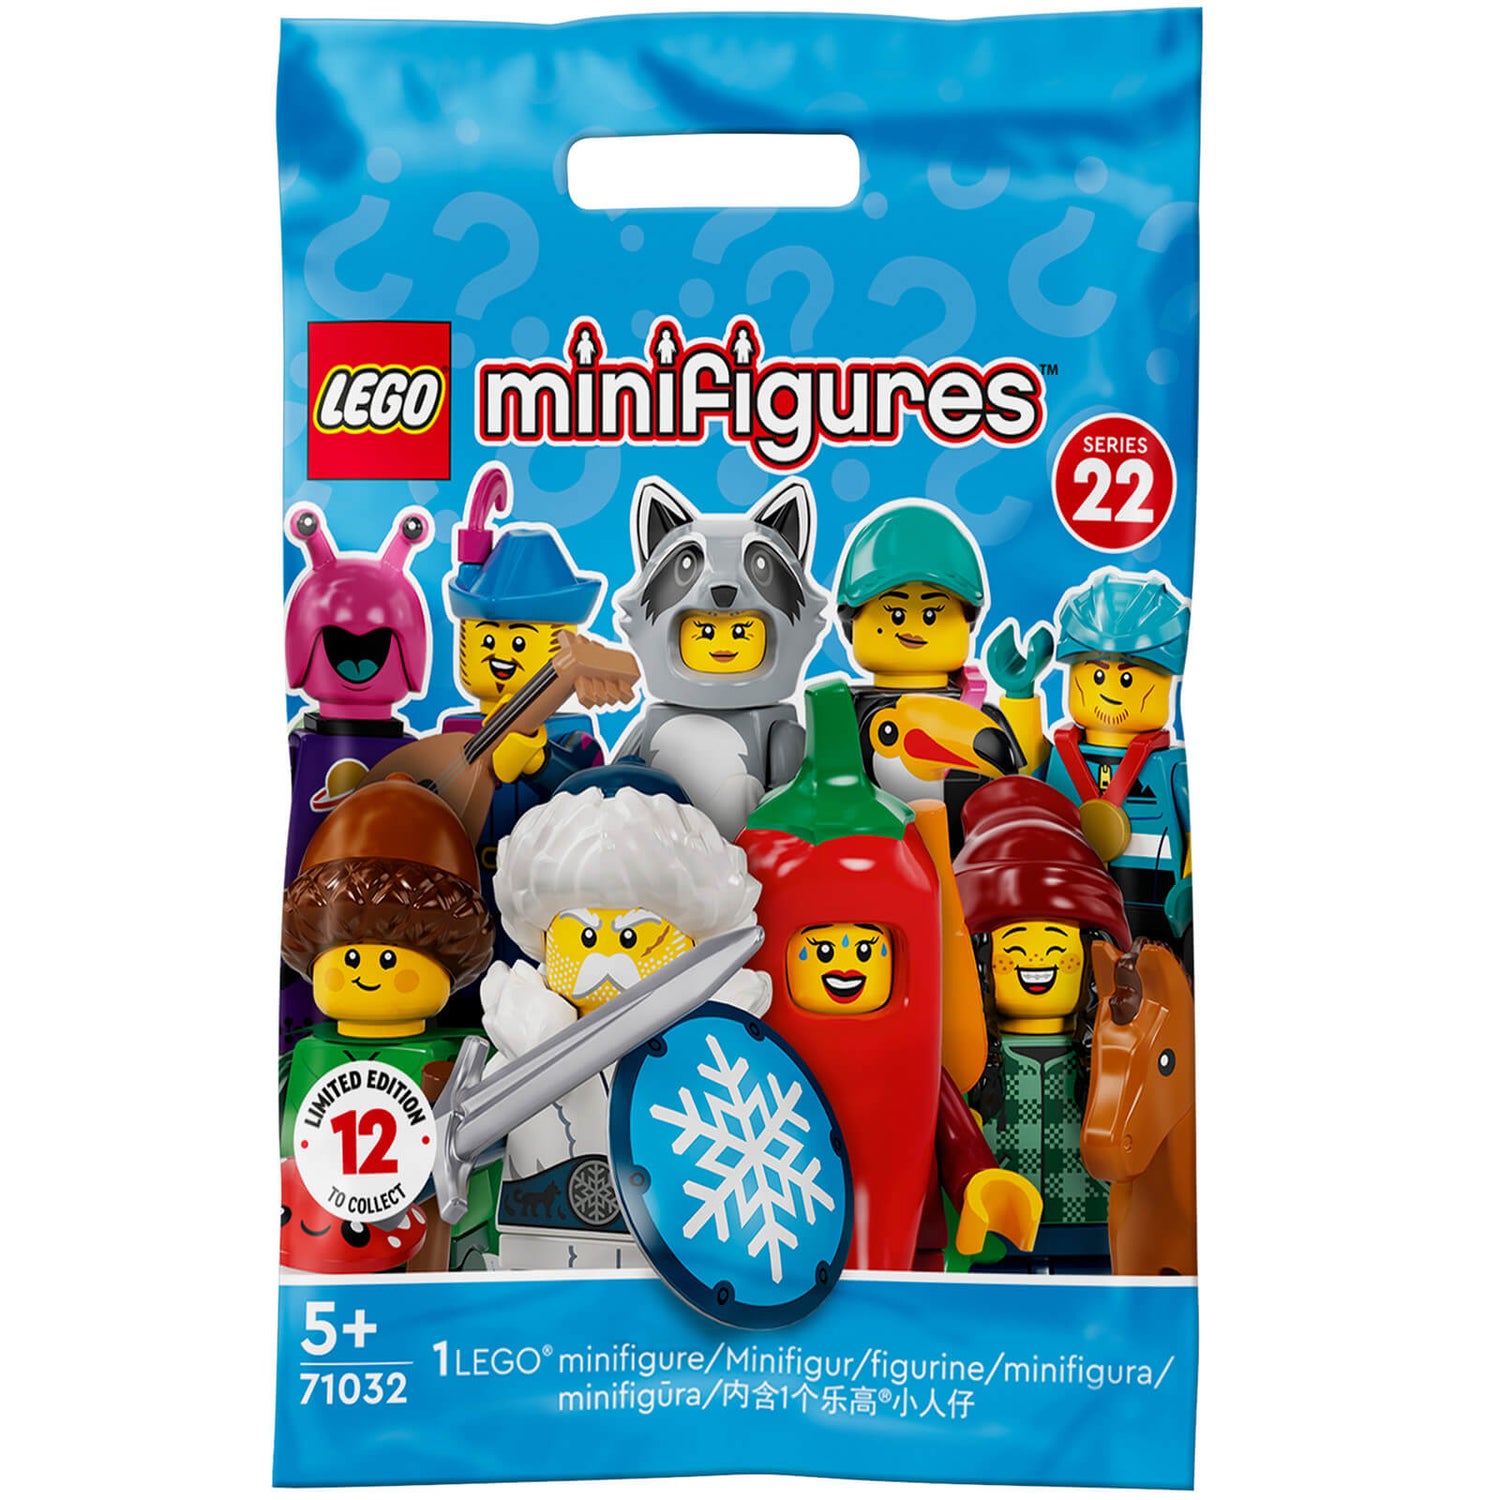 LEGO Minifigures: Classic Minifigures (71032)